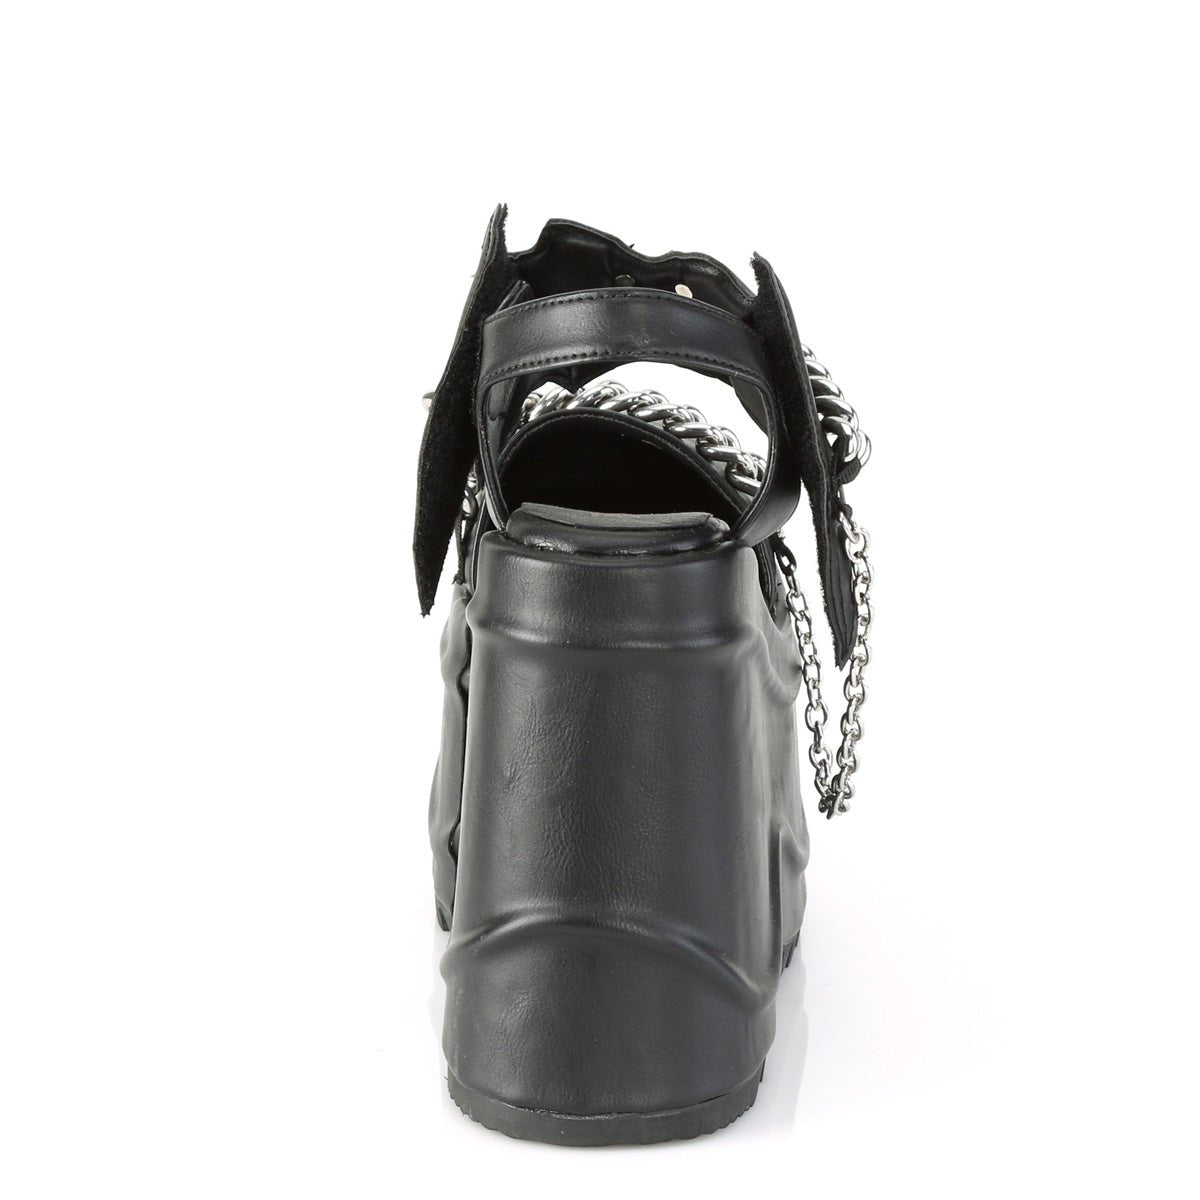 Too Fast | Demonia WAVE-20 | Black Vegan Leather Sandals